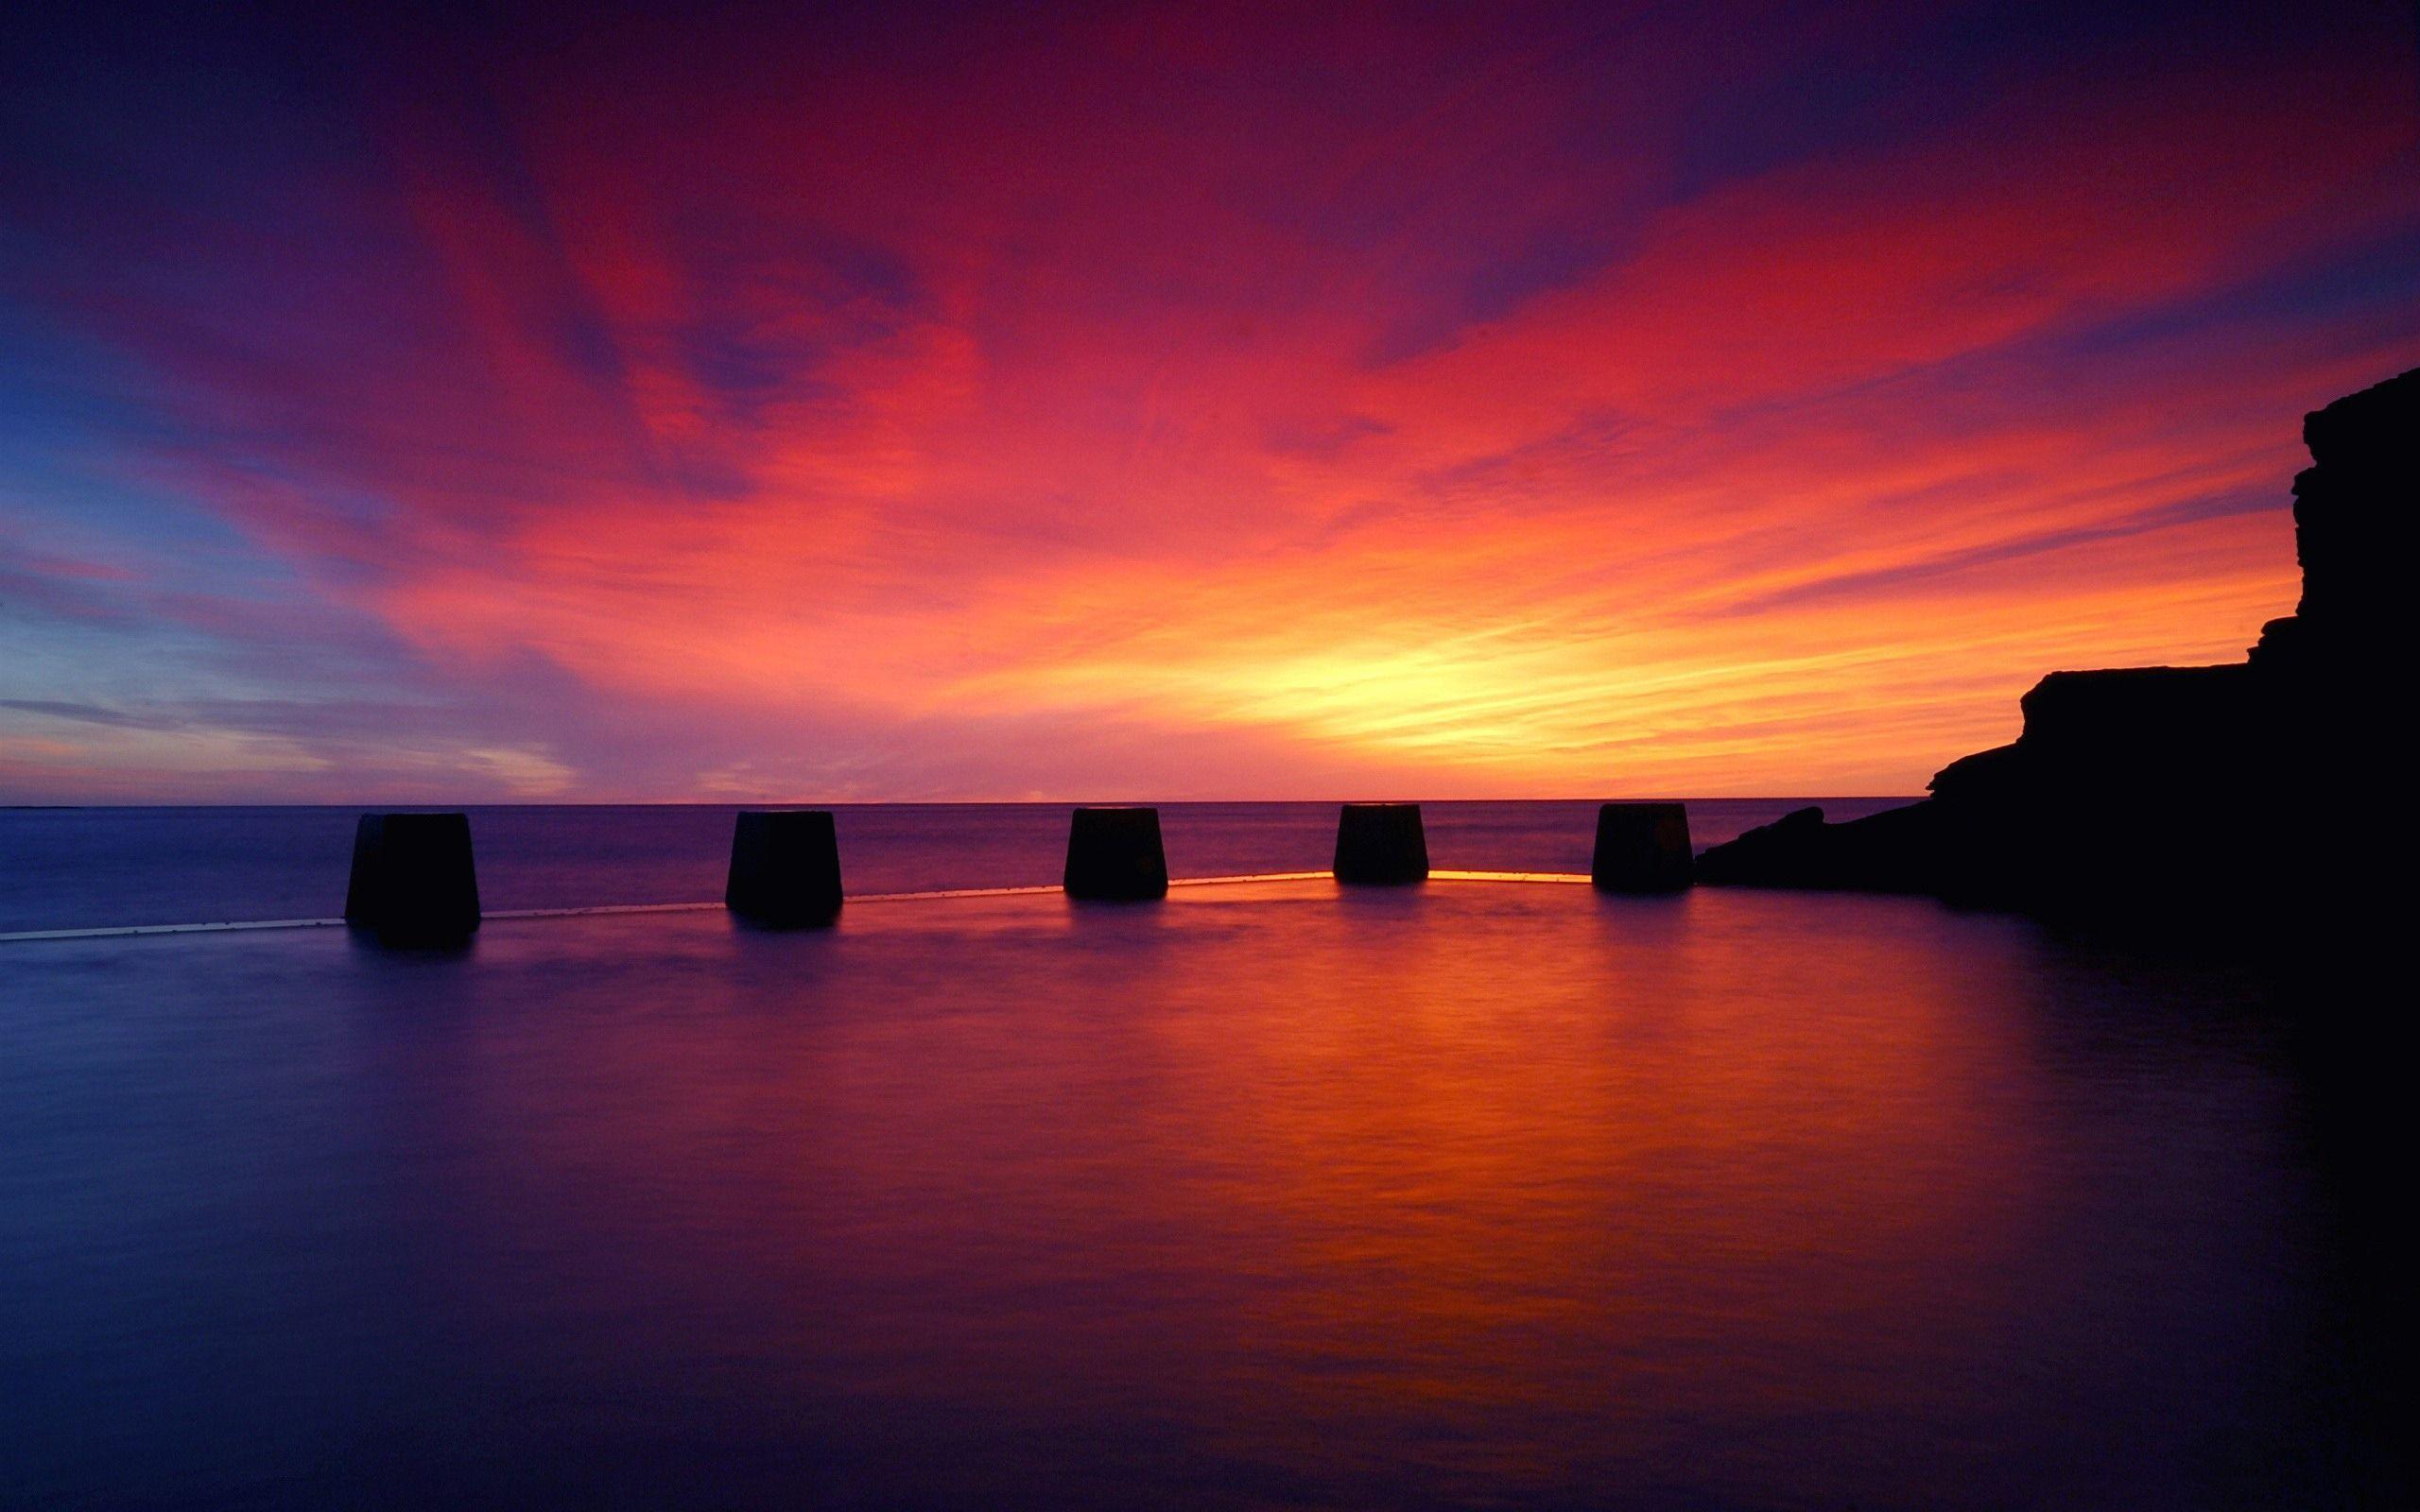 Ocean Purple Sunset Wallpapers - Top Free Ocean Purple Sunset